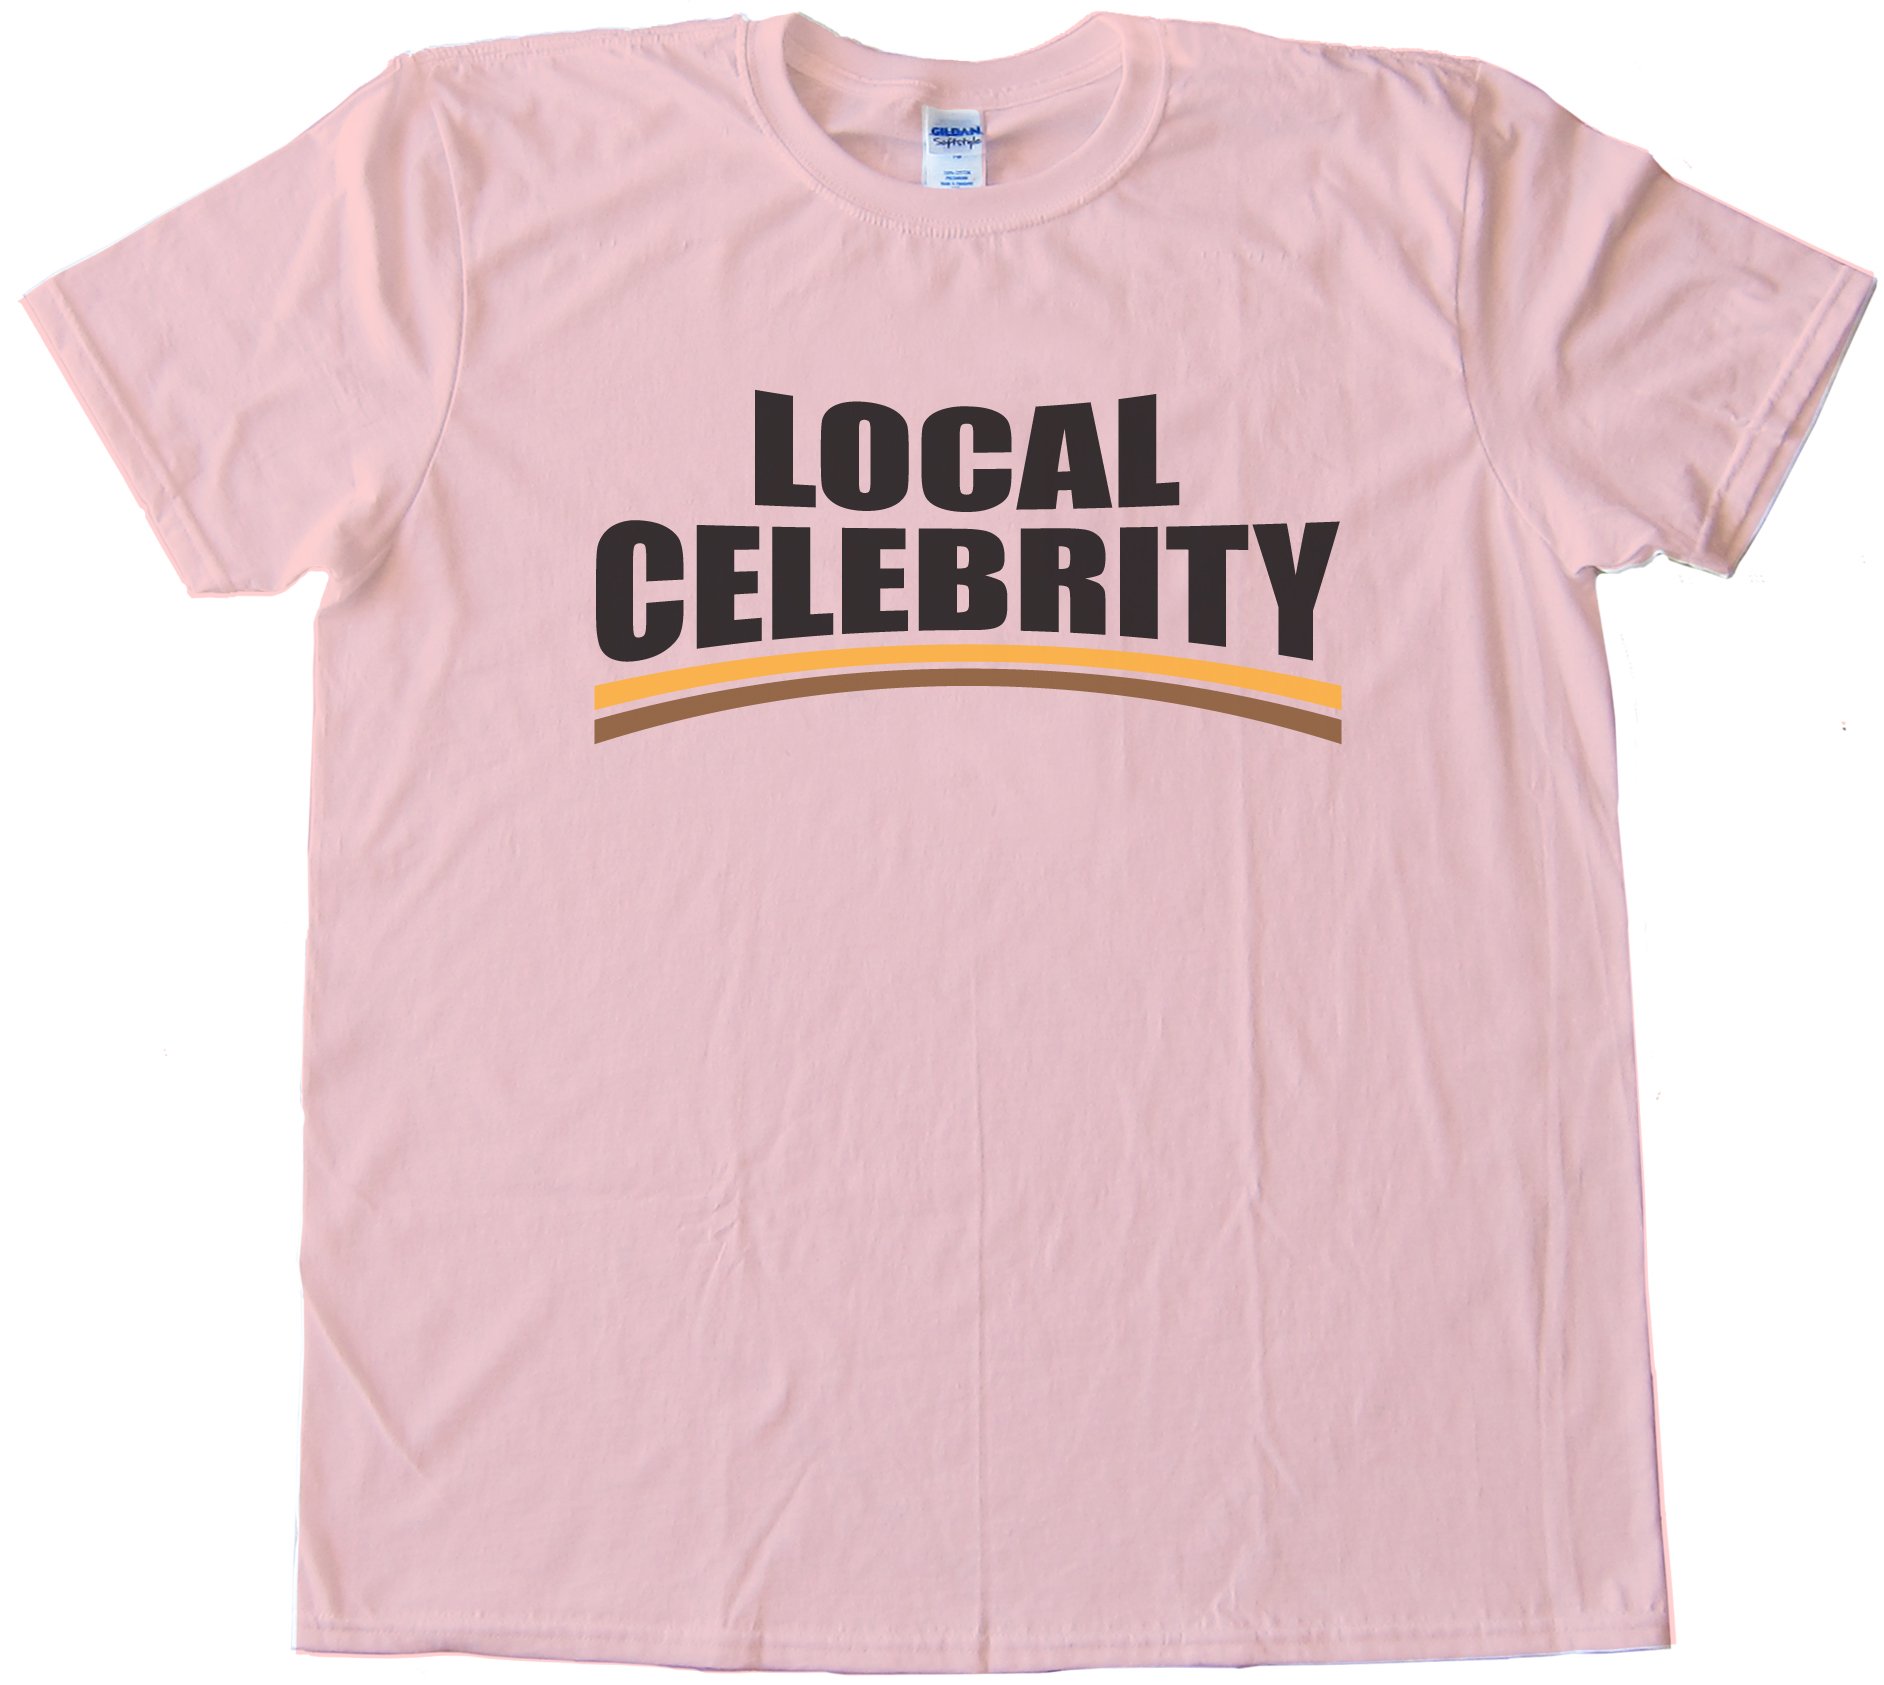 Local Celebrity Tee Shirt